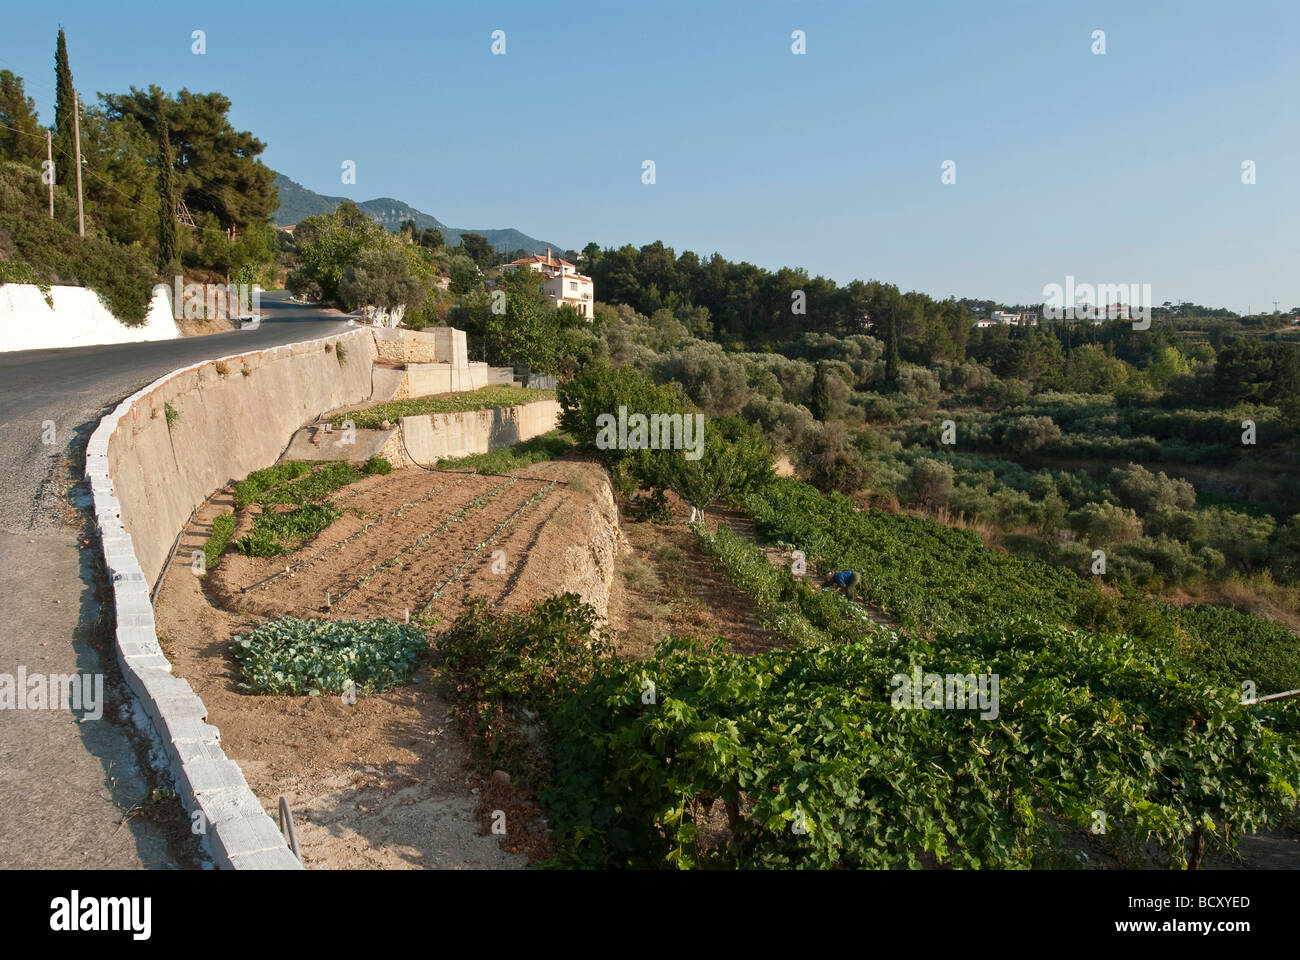 scenes from a greek village on an aegean island Stock Photo